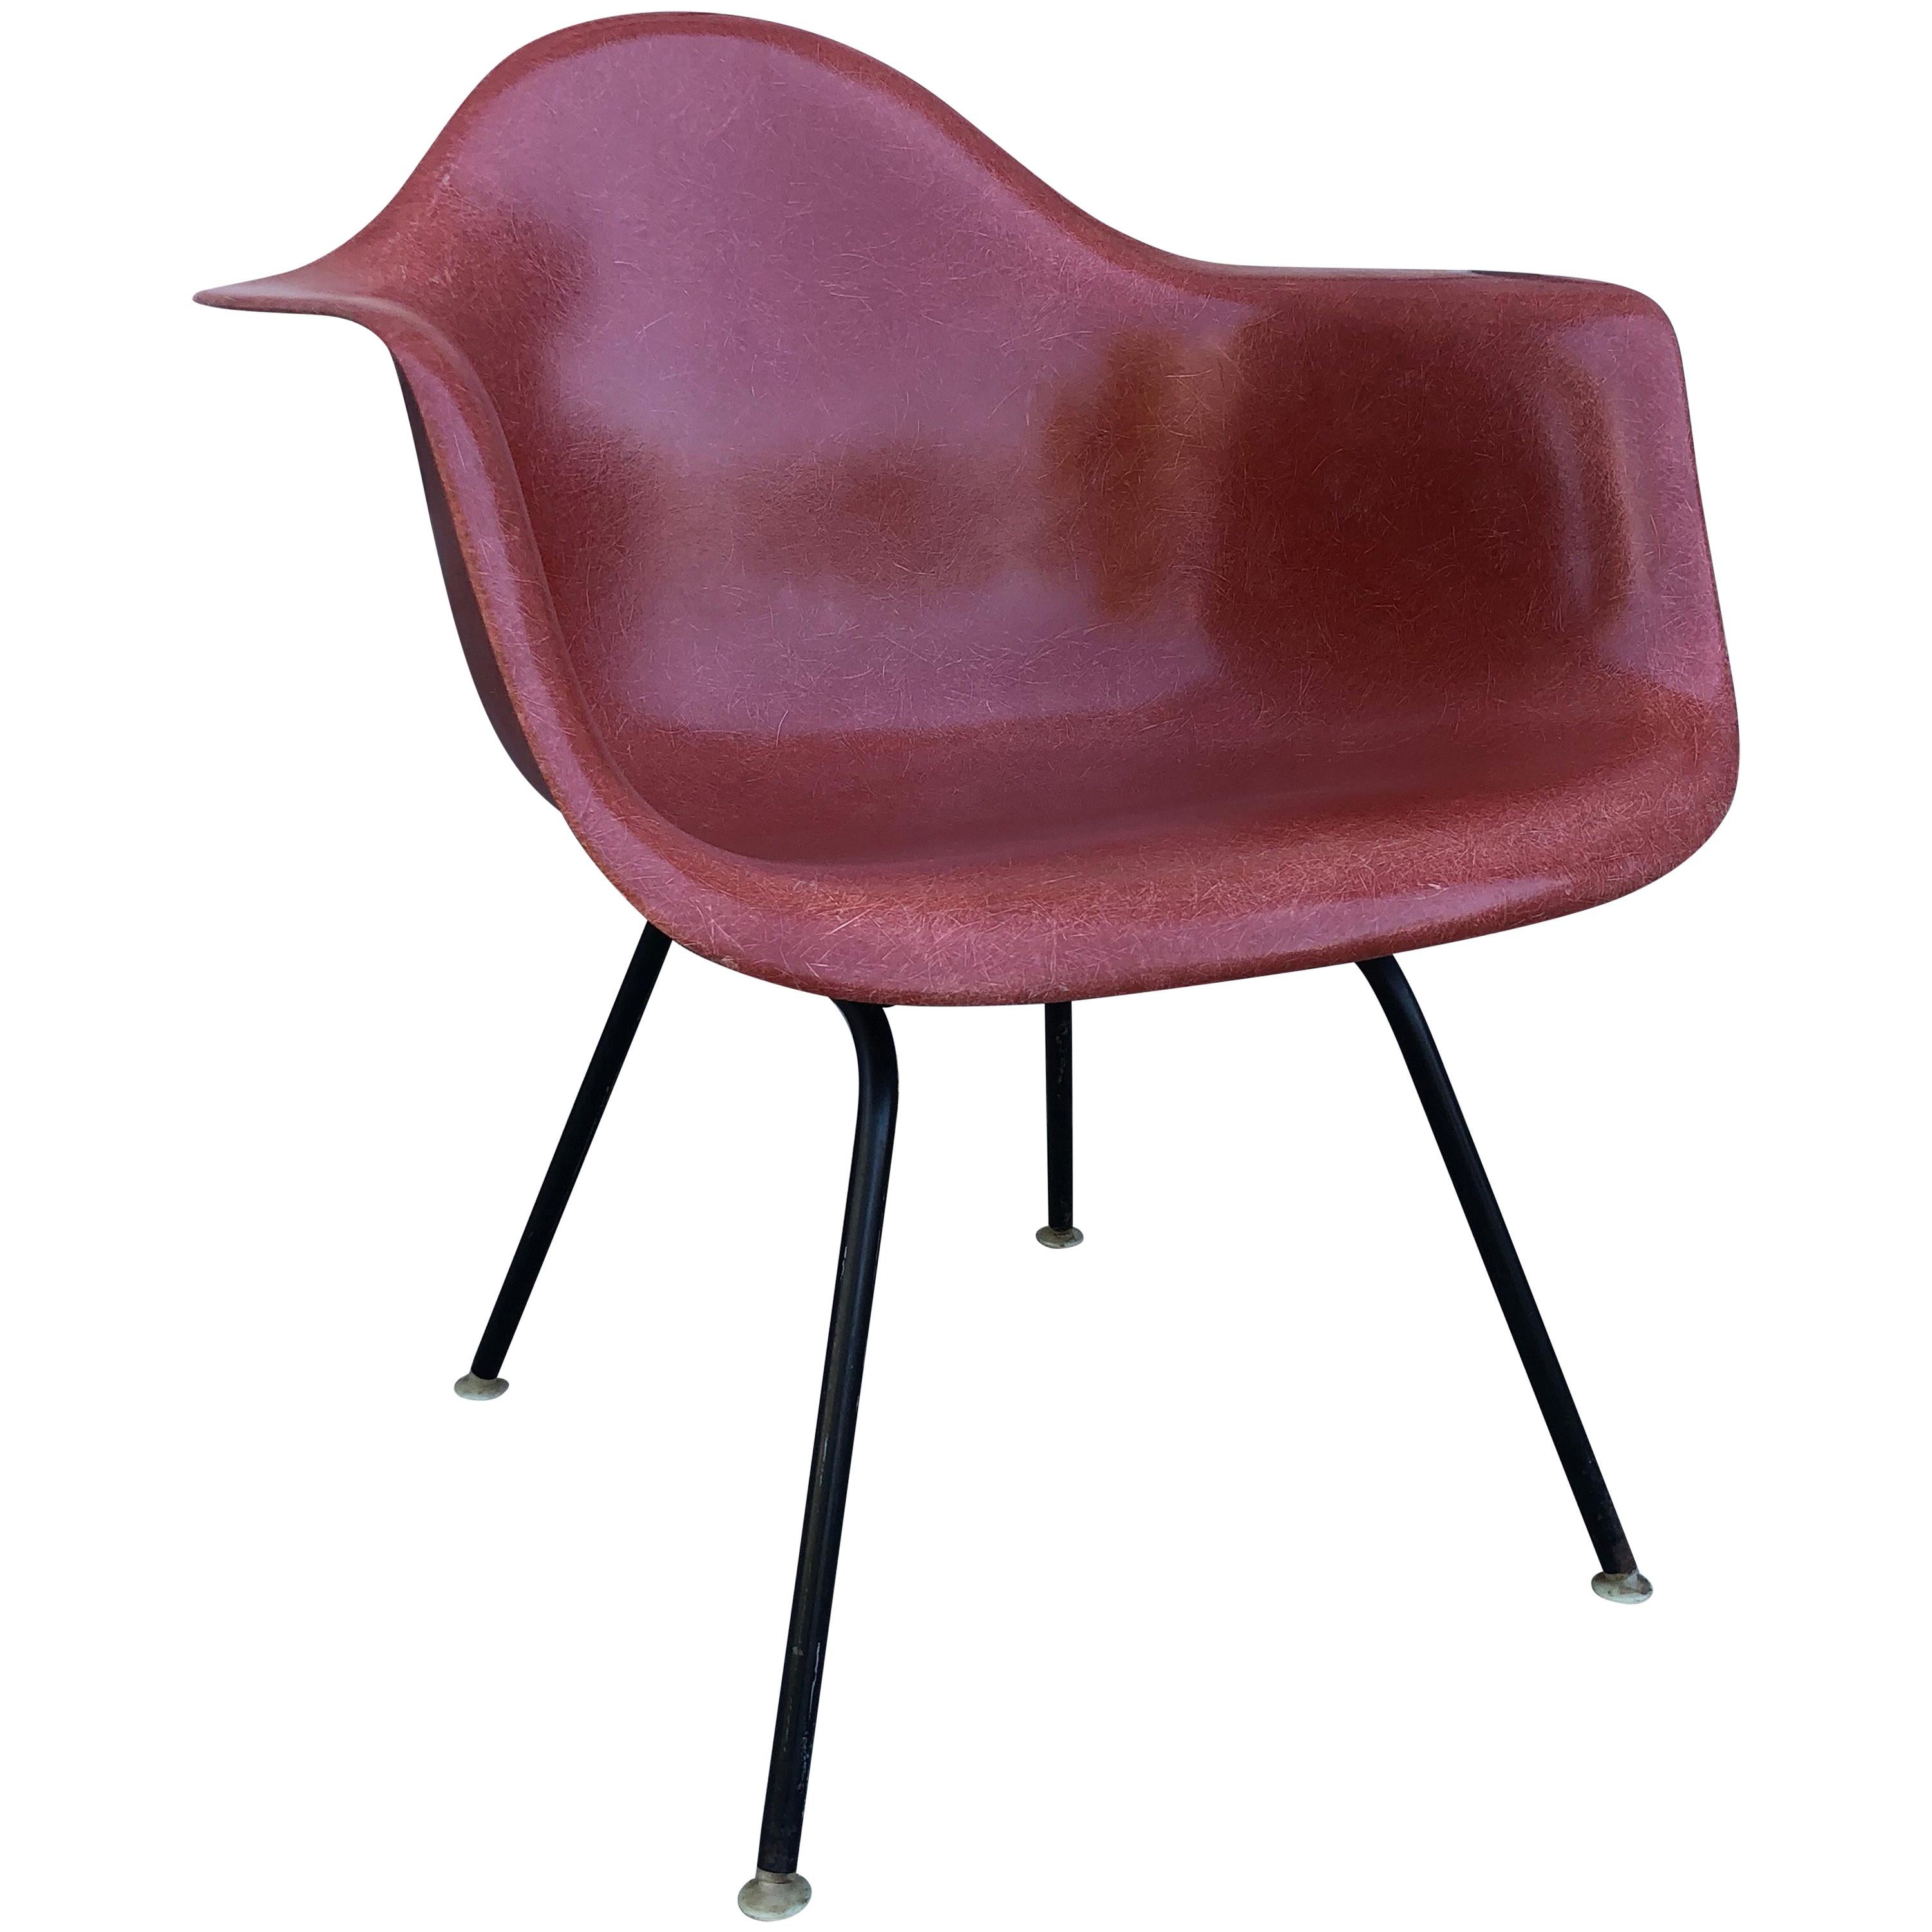 Herman Miller Eames armchair in Terracotta